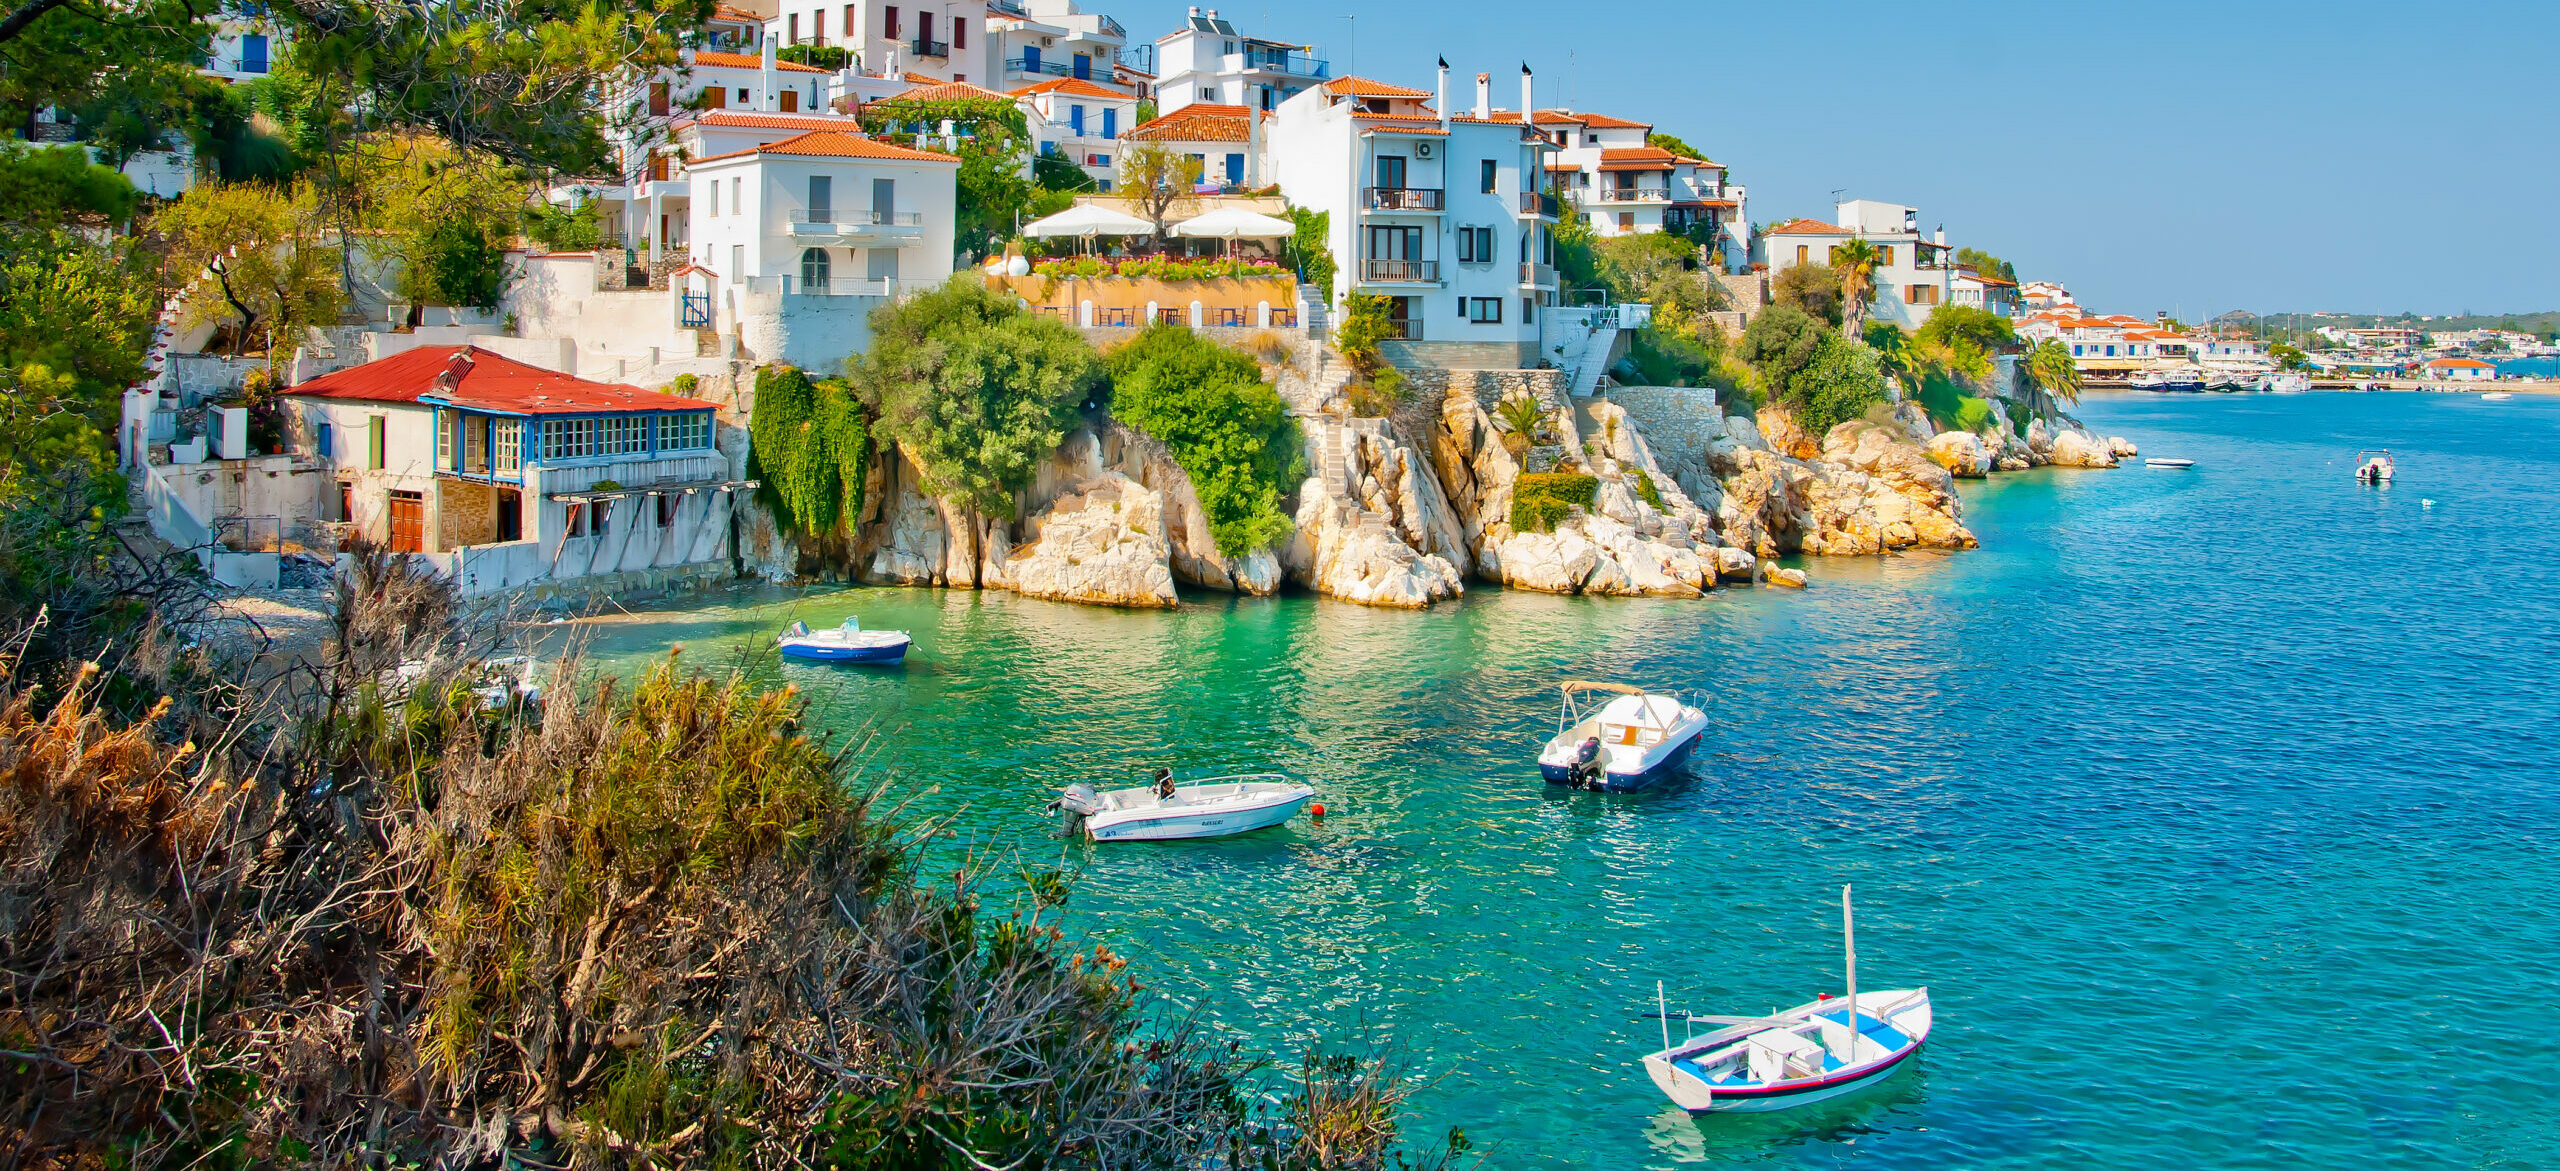 Skiathos: The small and charming cosmopolitan island of Sporades Island Complex